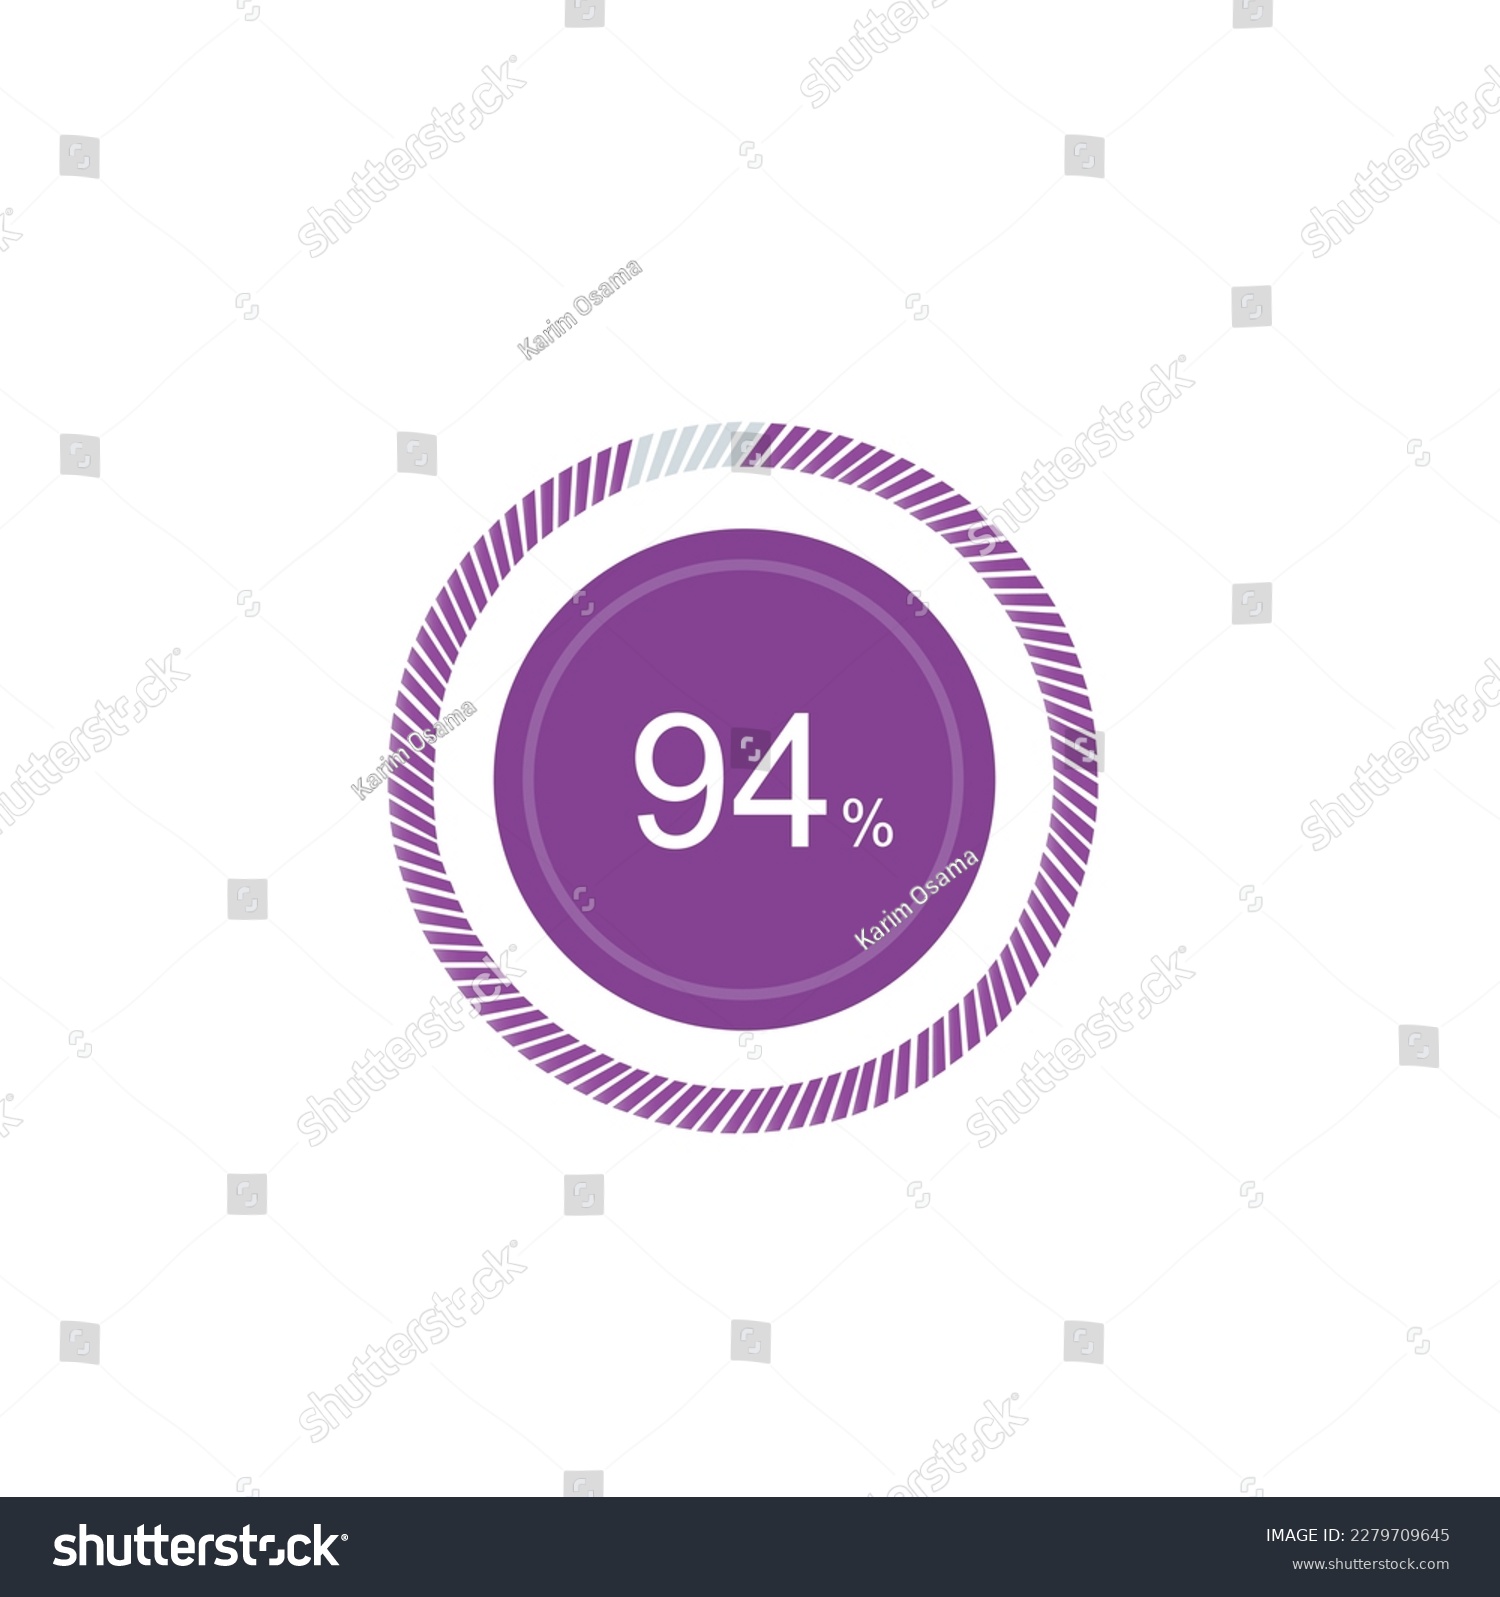 SVG of 94% loading, icon pie purple chart 94 percent. svg